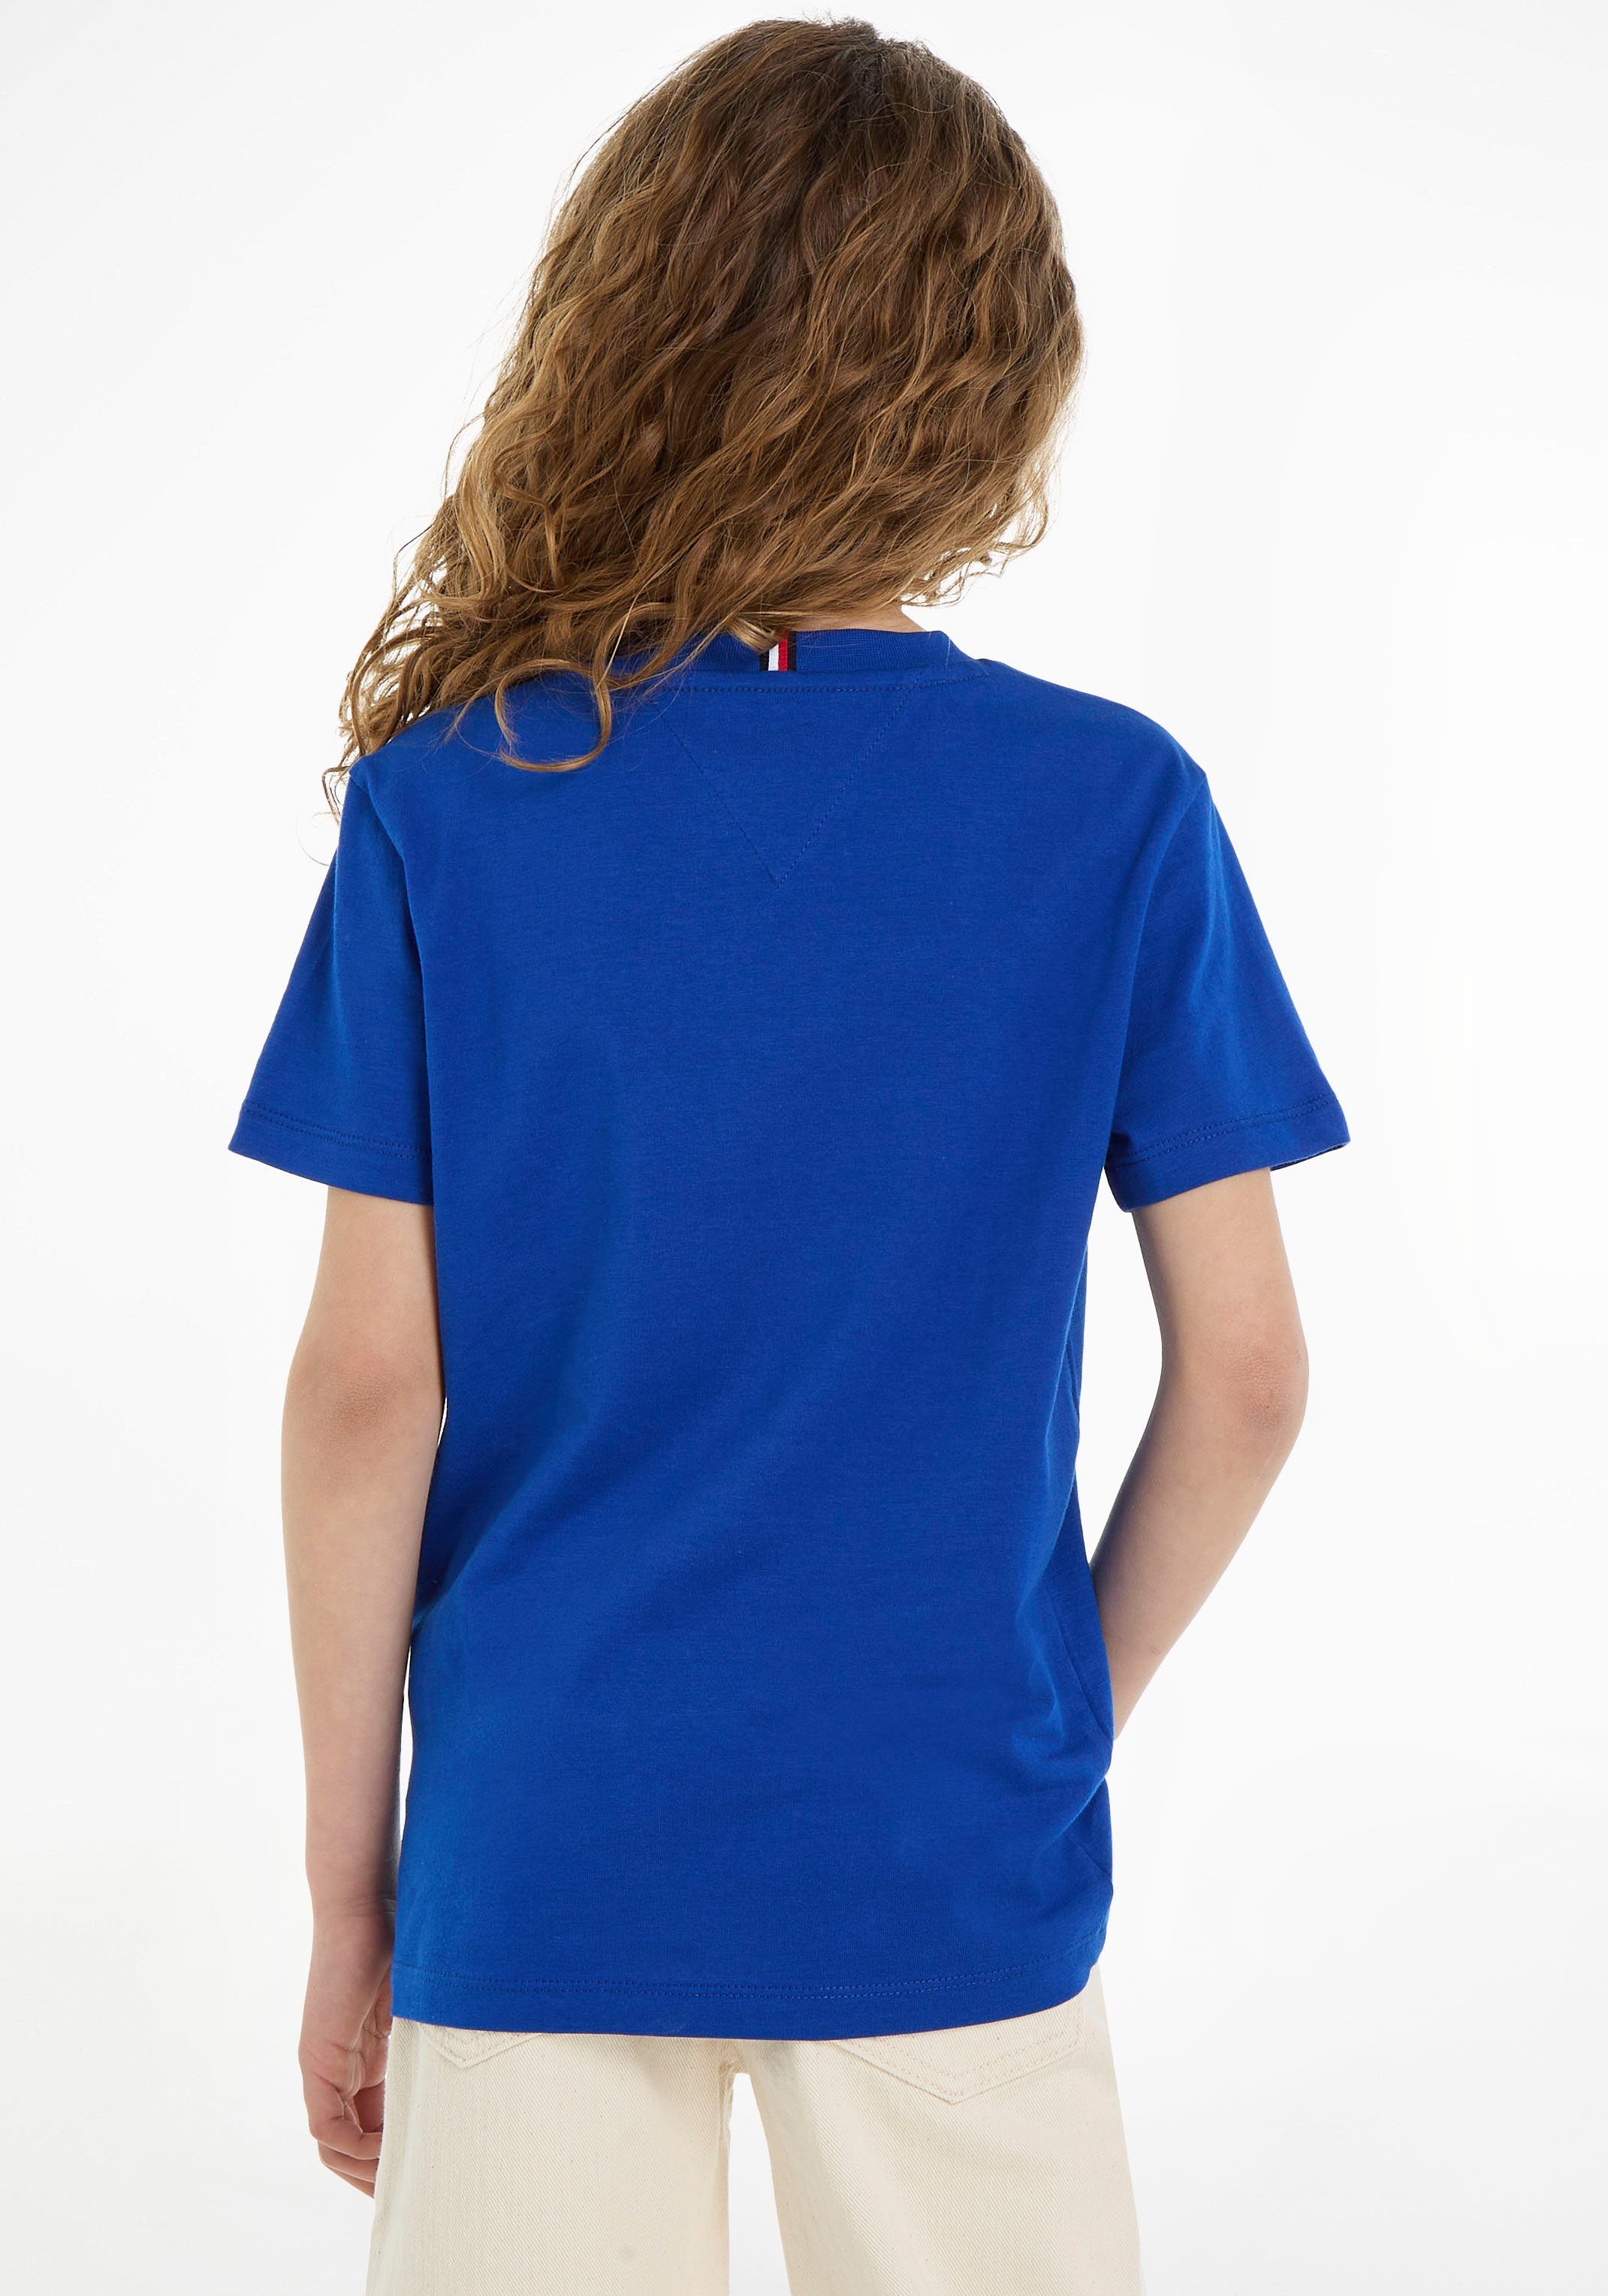 Tommy Hilfiger ESSENTIAL bis Kinder 16 S/S U Jahre T-Shirt ultra TEE blue